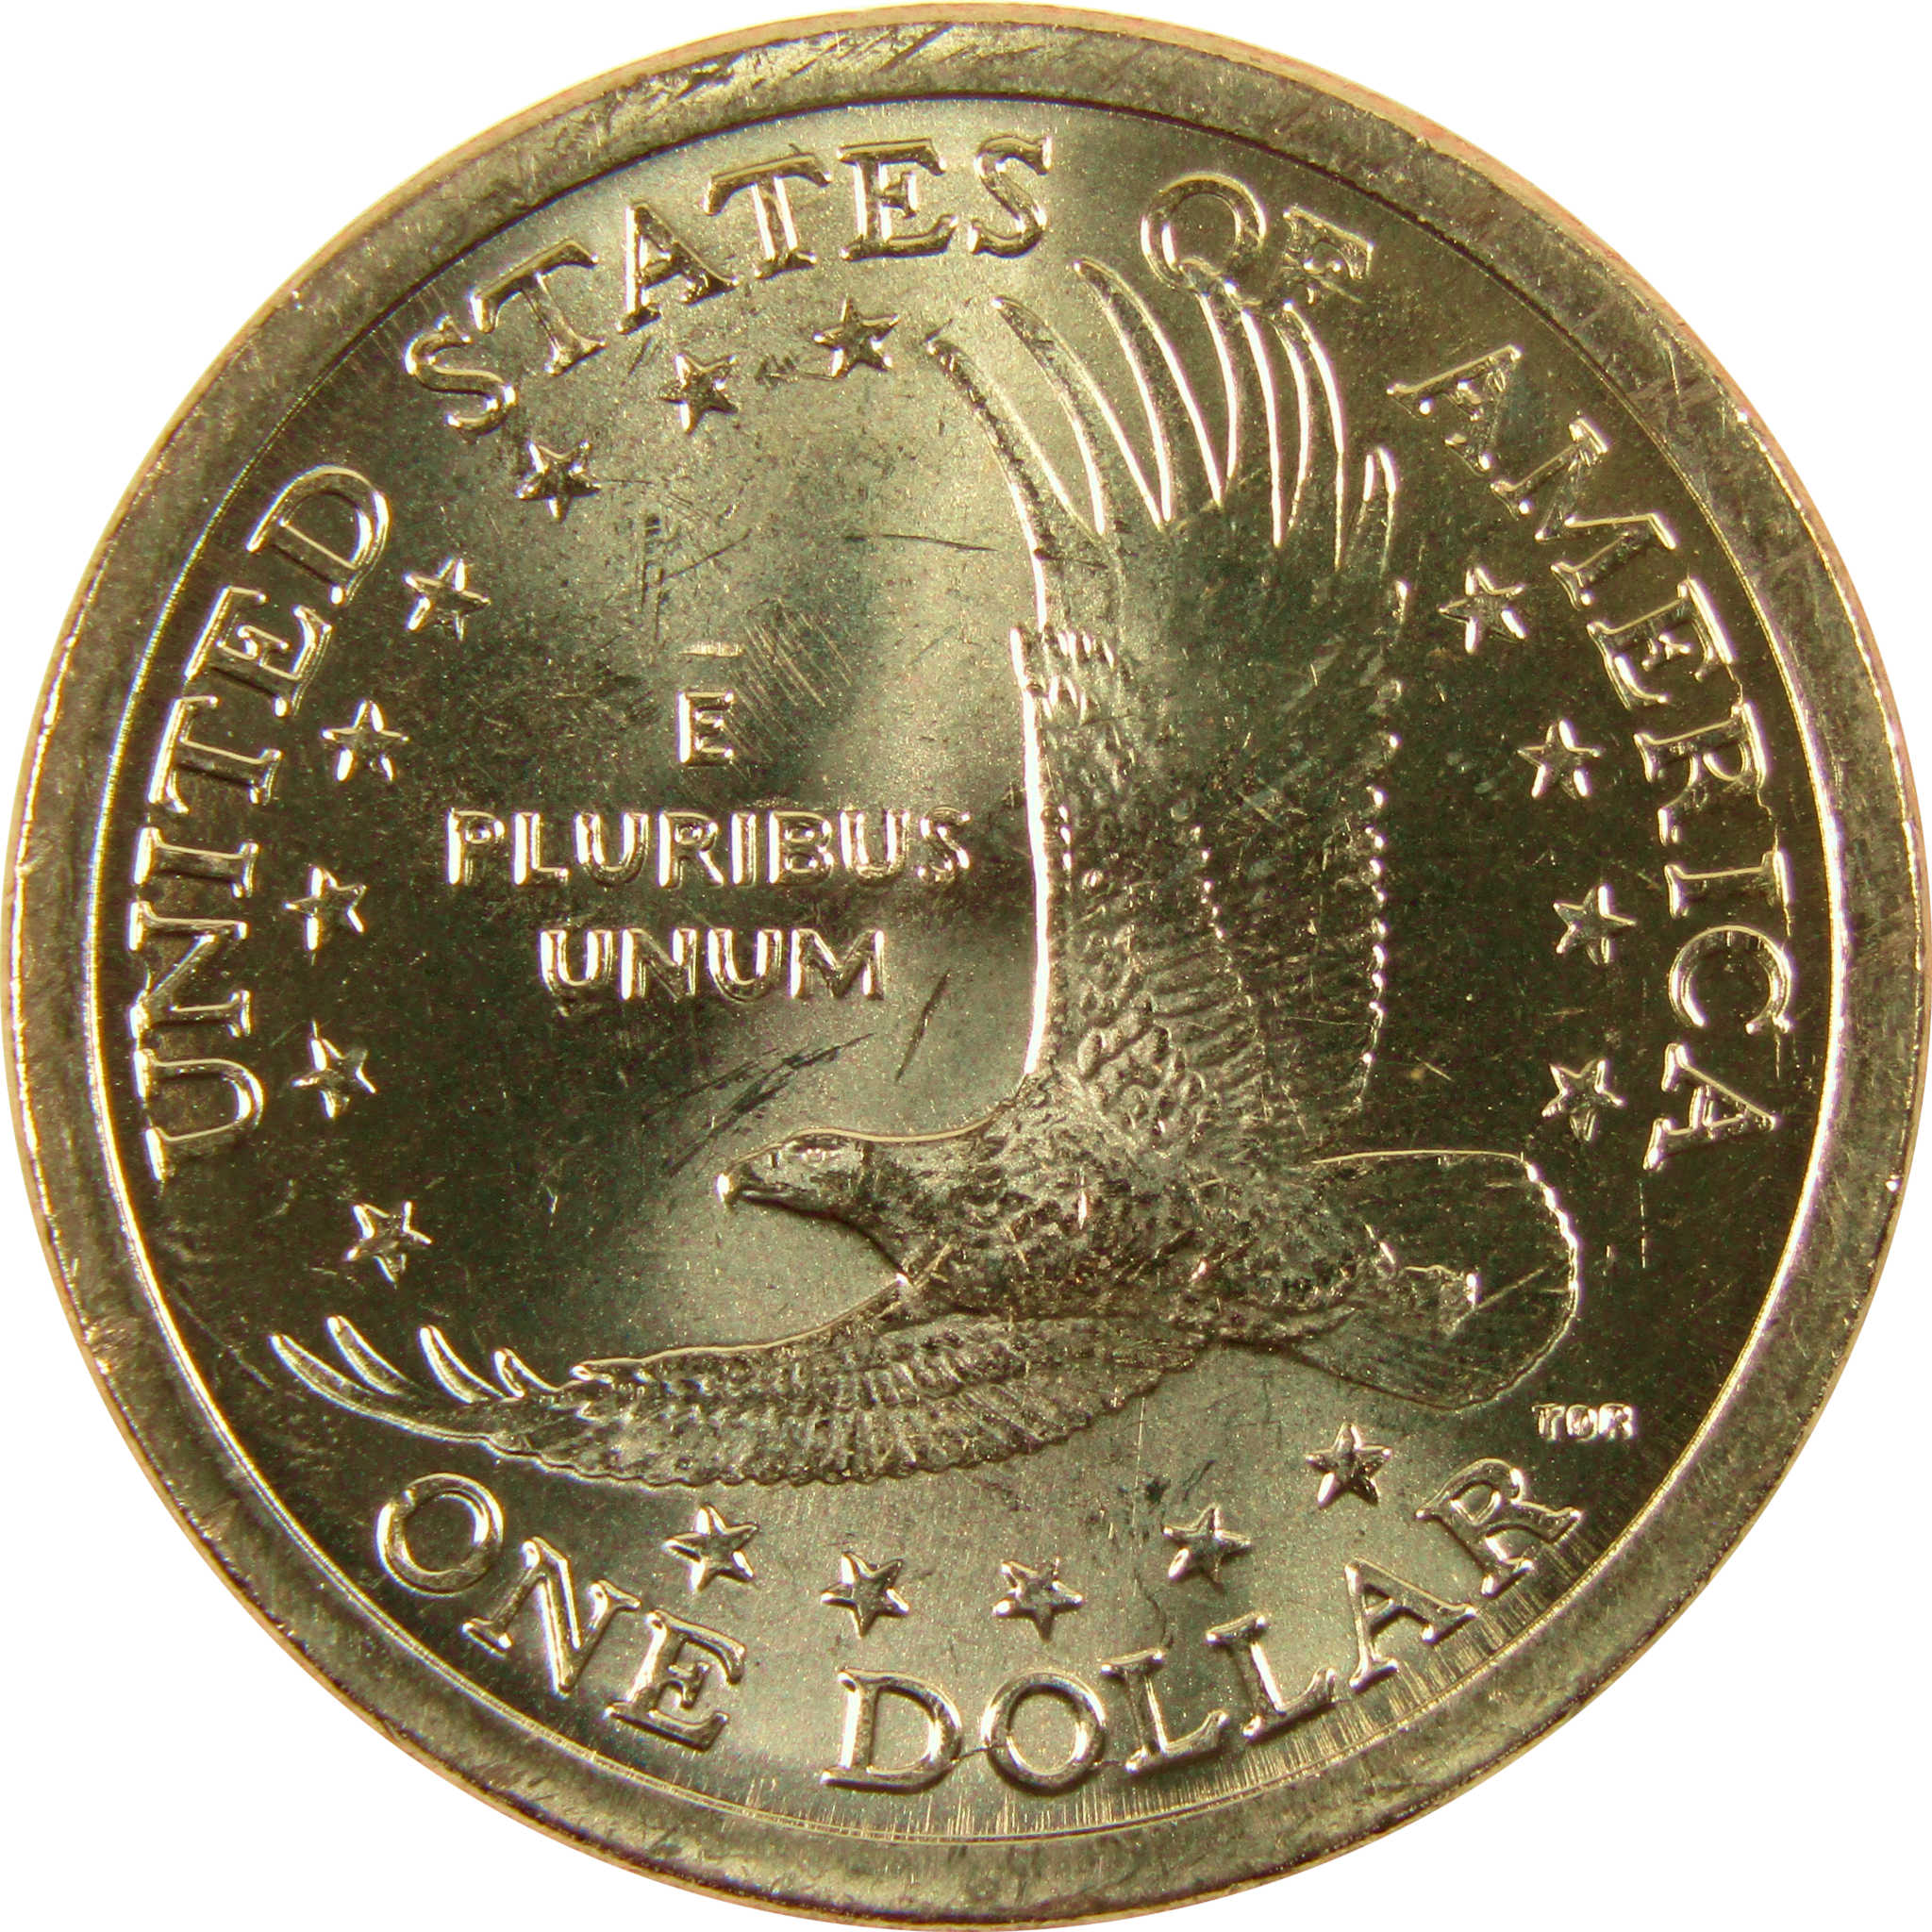 2007 D Sacagawea Native American Dollar BU Uncirculated $1 Coin